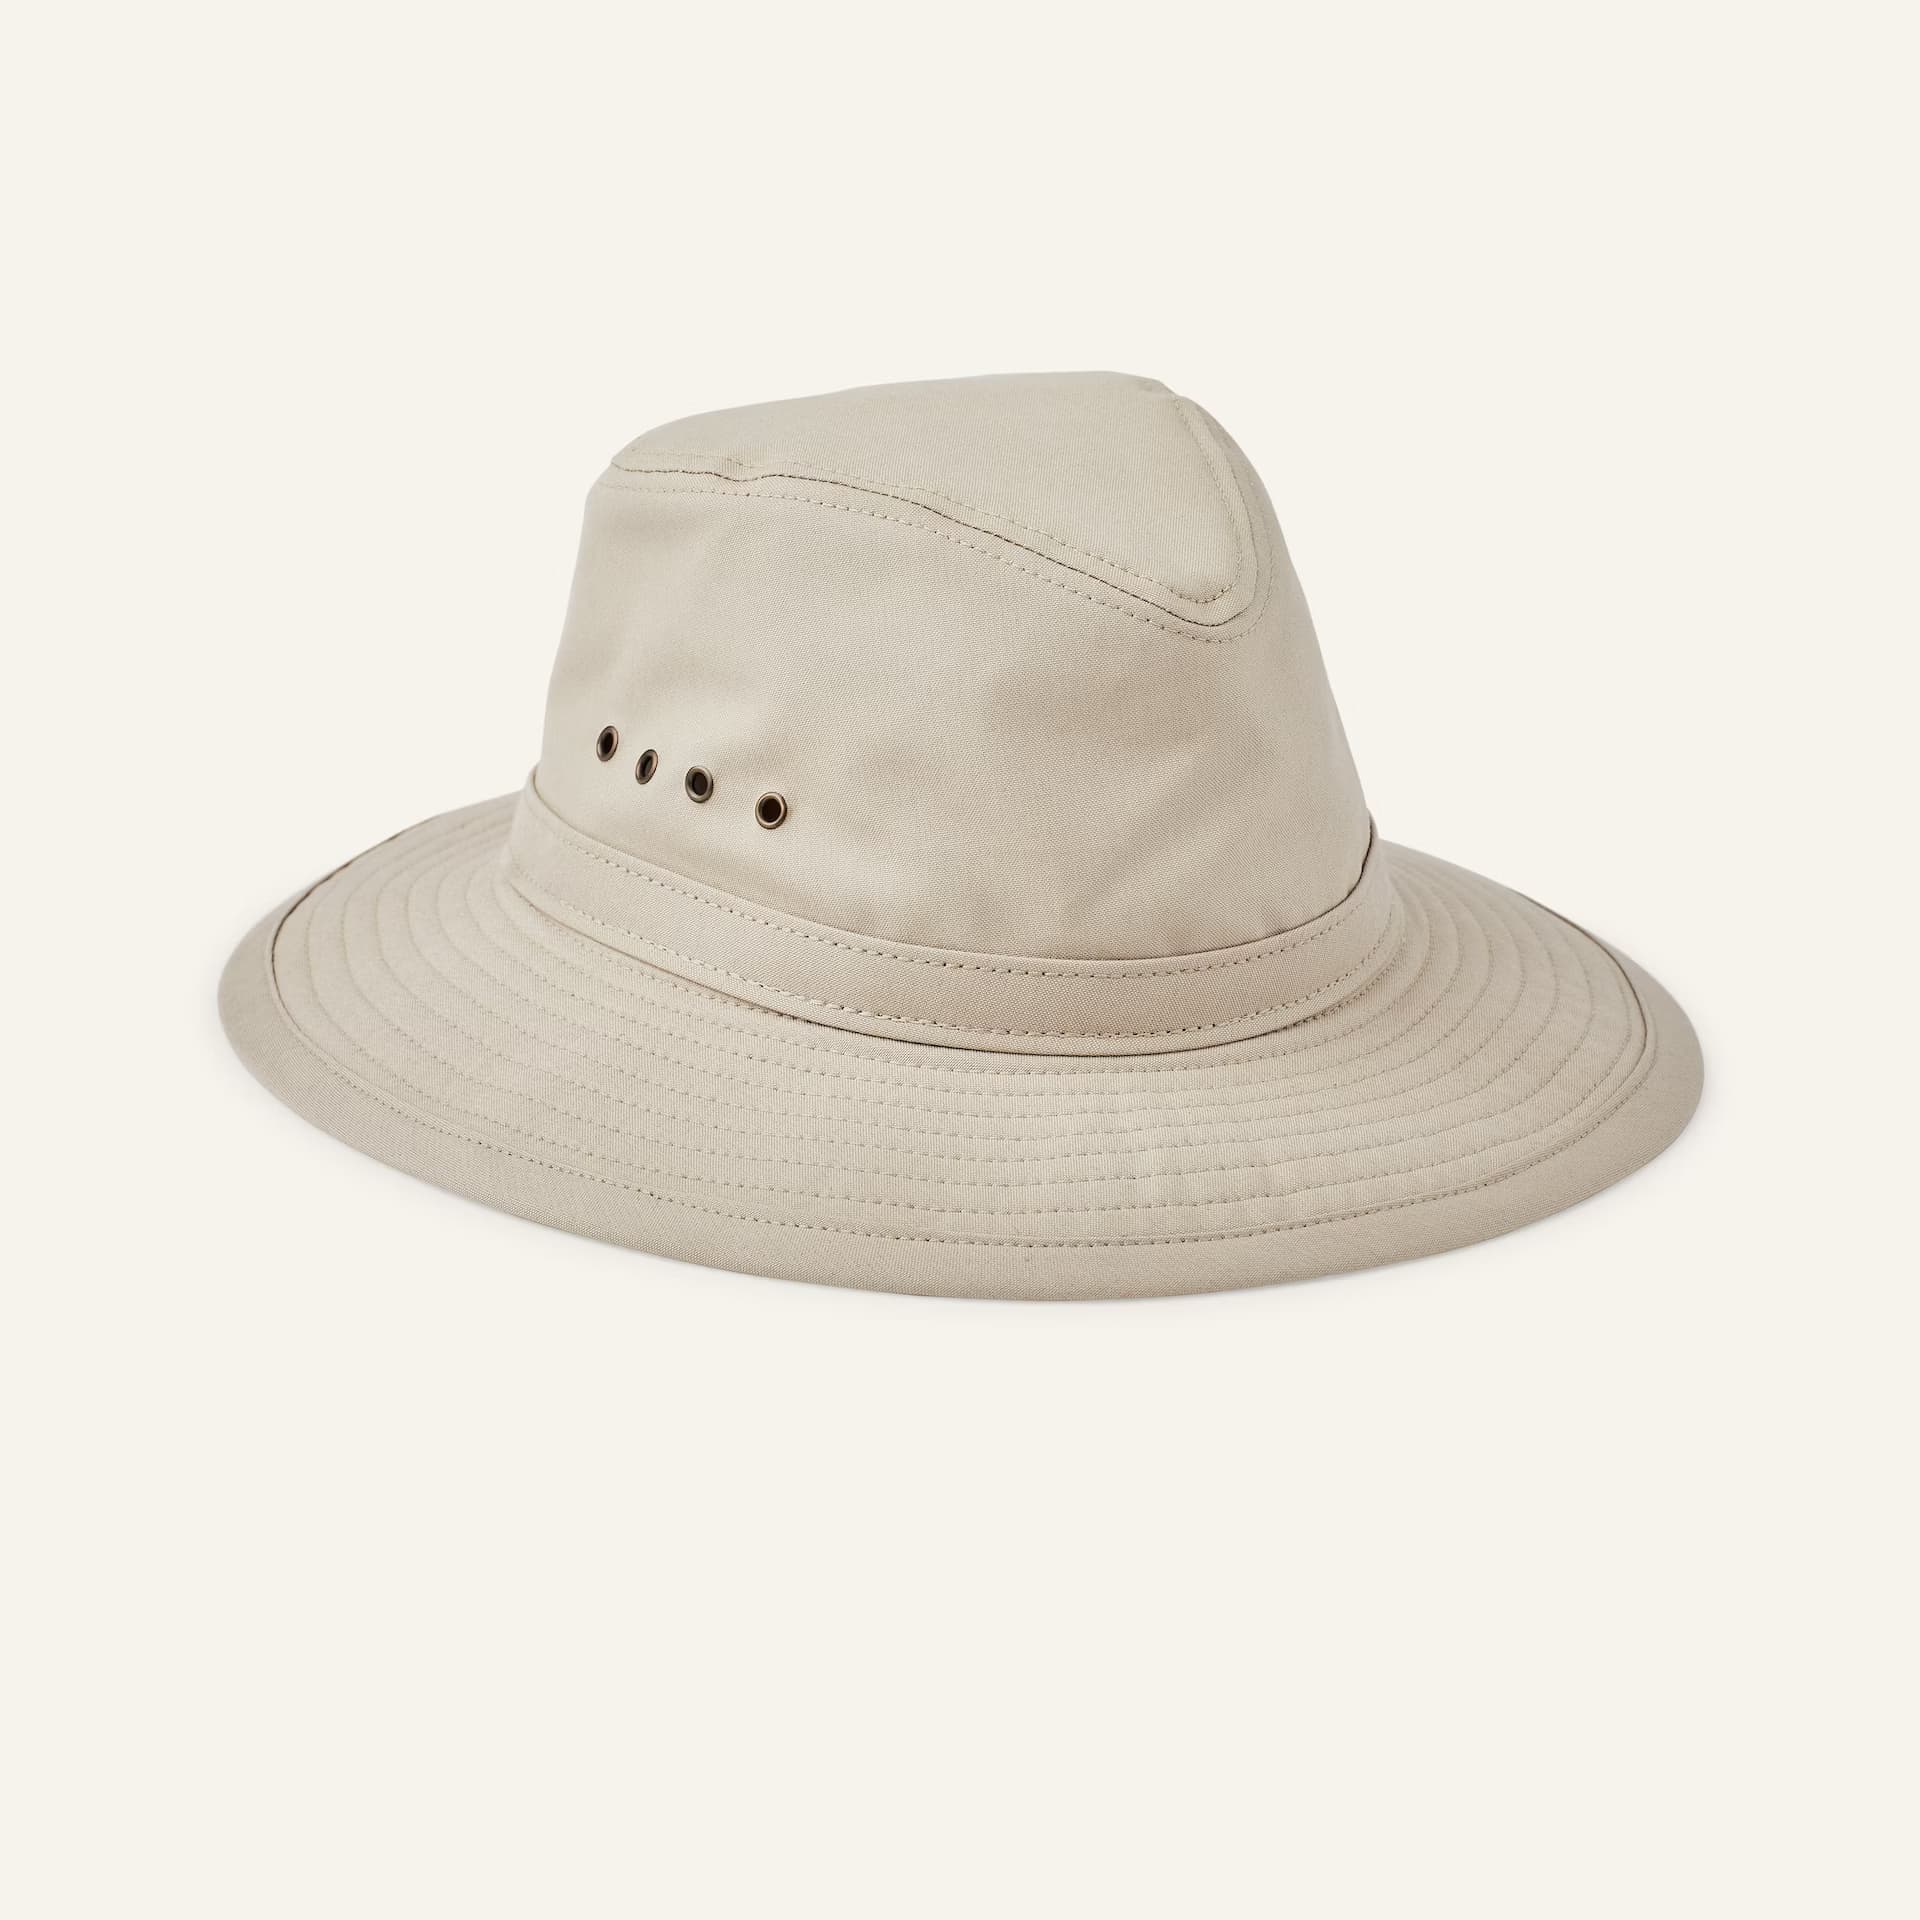 Filson Summer Packer Hat - Desert Tan - Medium